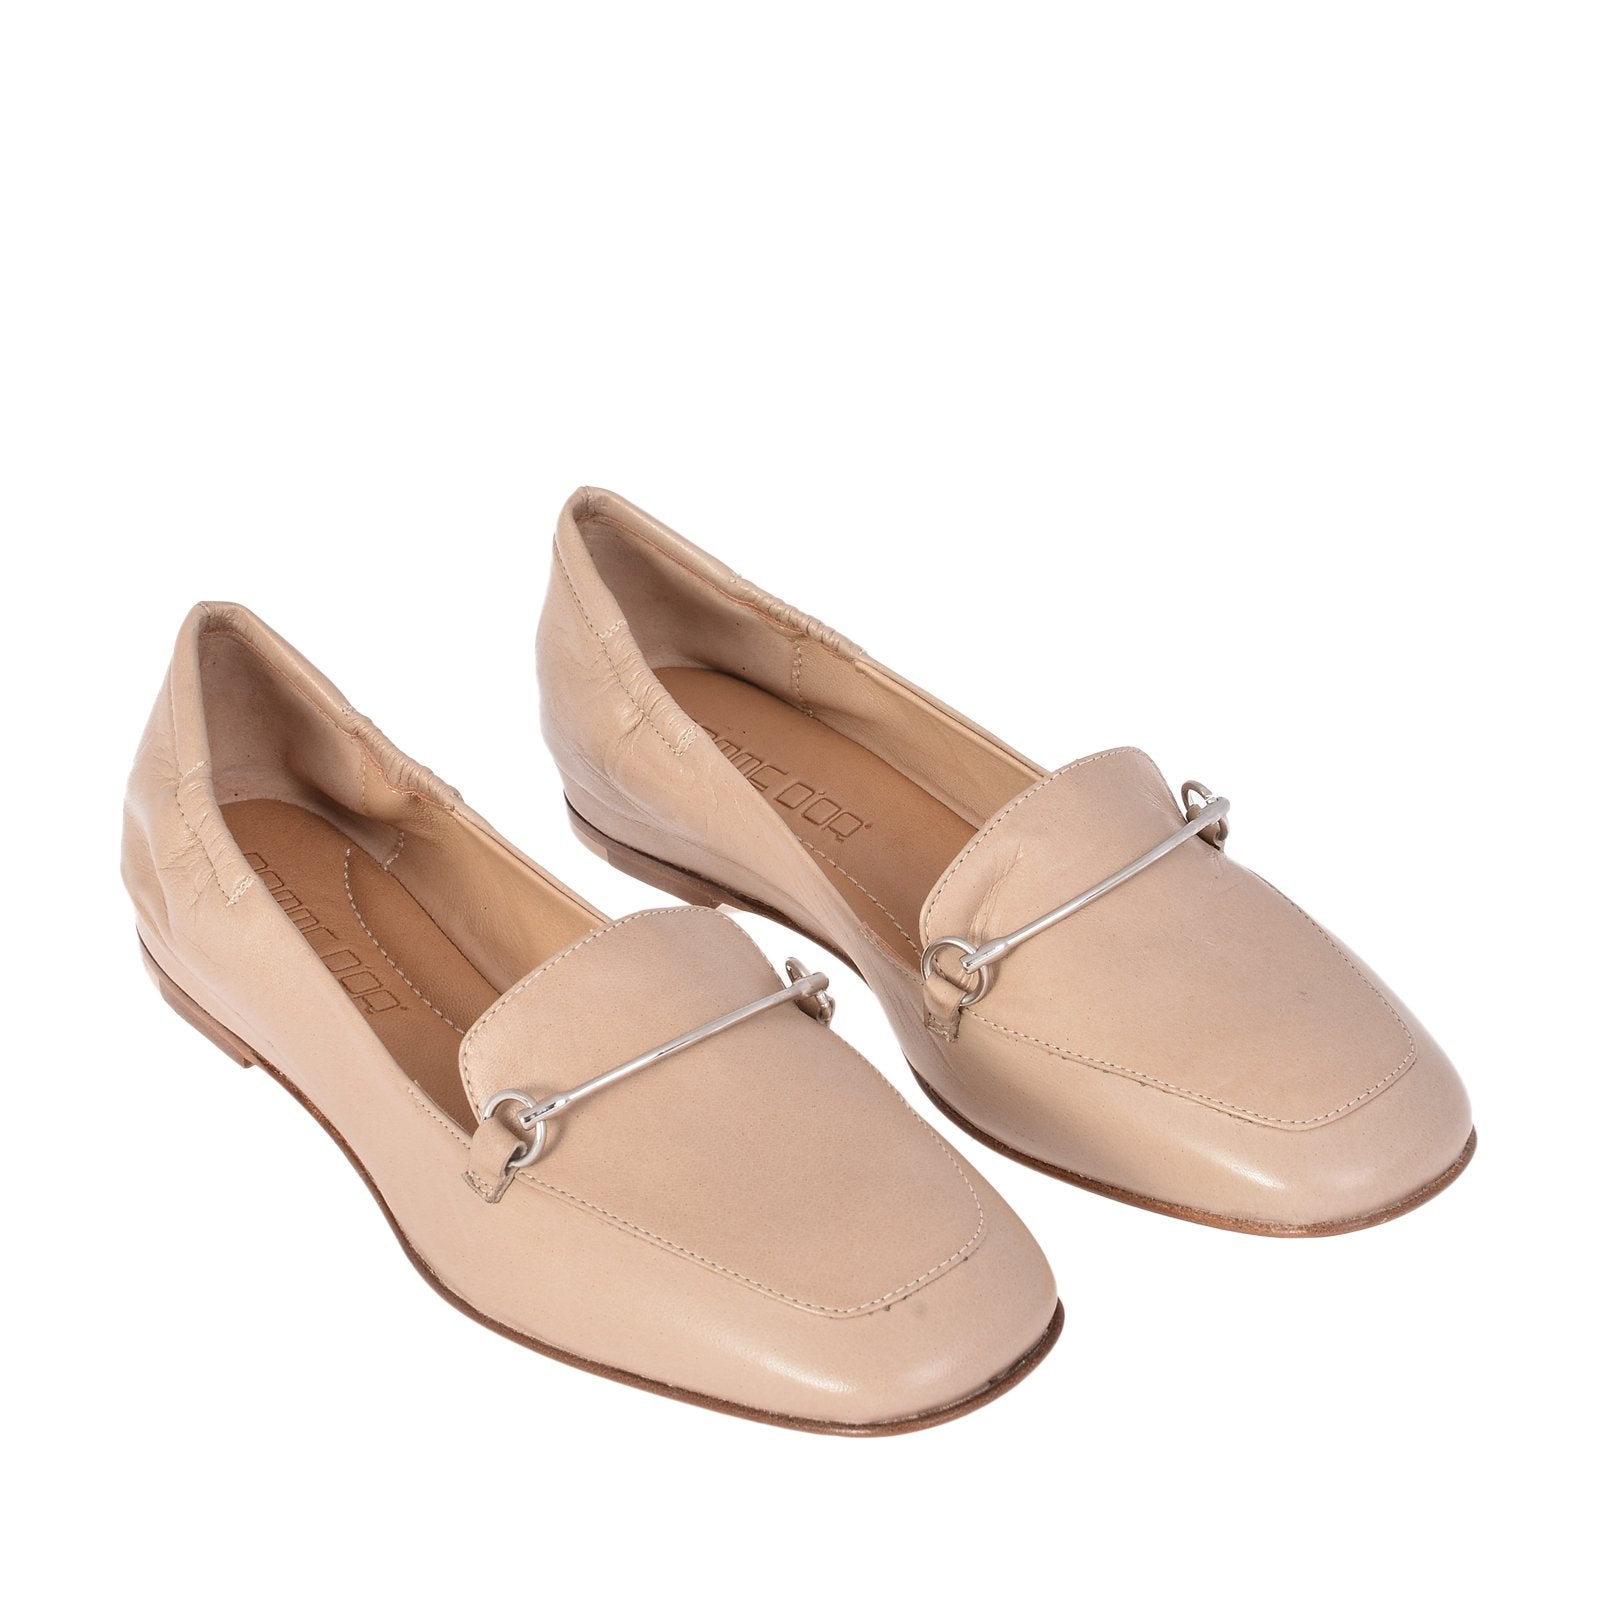 Lena Nude Leather Loafers Flats 1144NUDE - 3